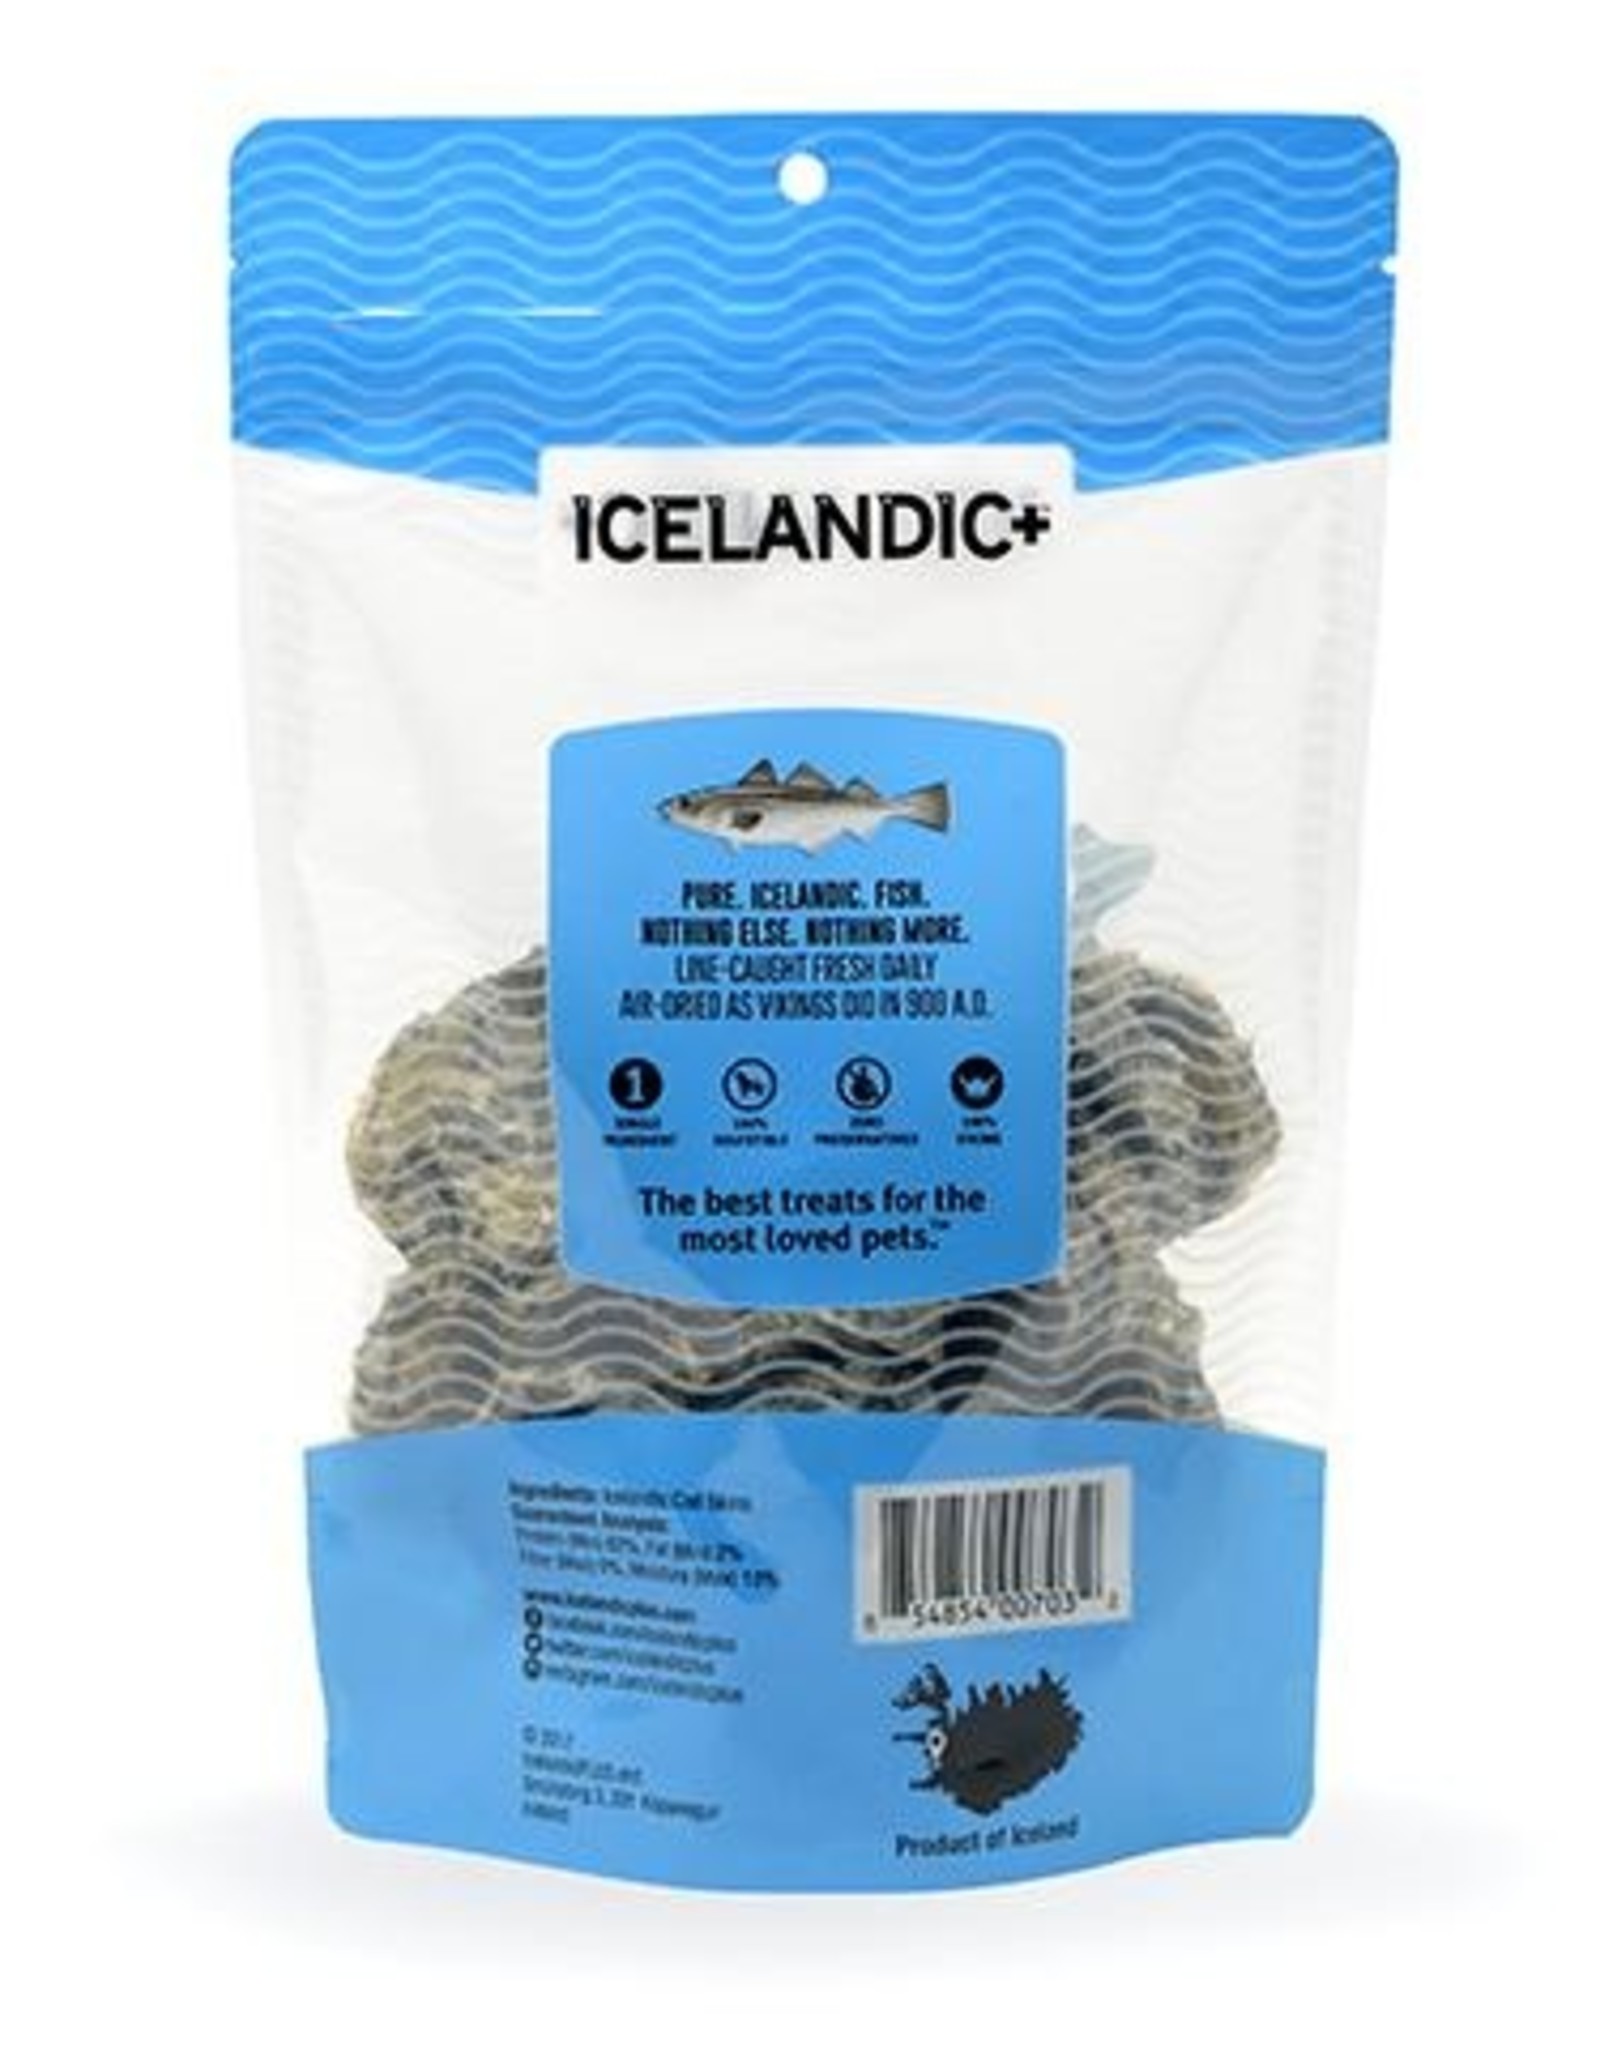 ICELANDIC PLUS ICELANDIC TREAT COD SKIN ROLLS 3OZ